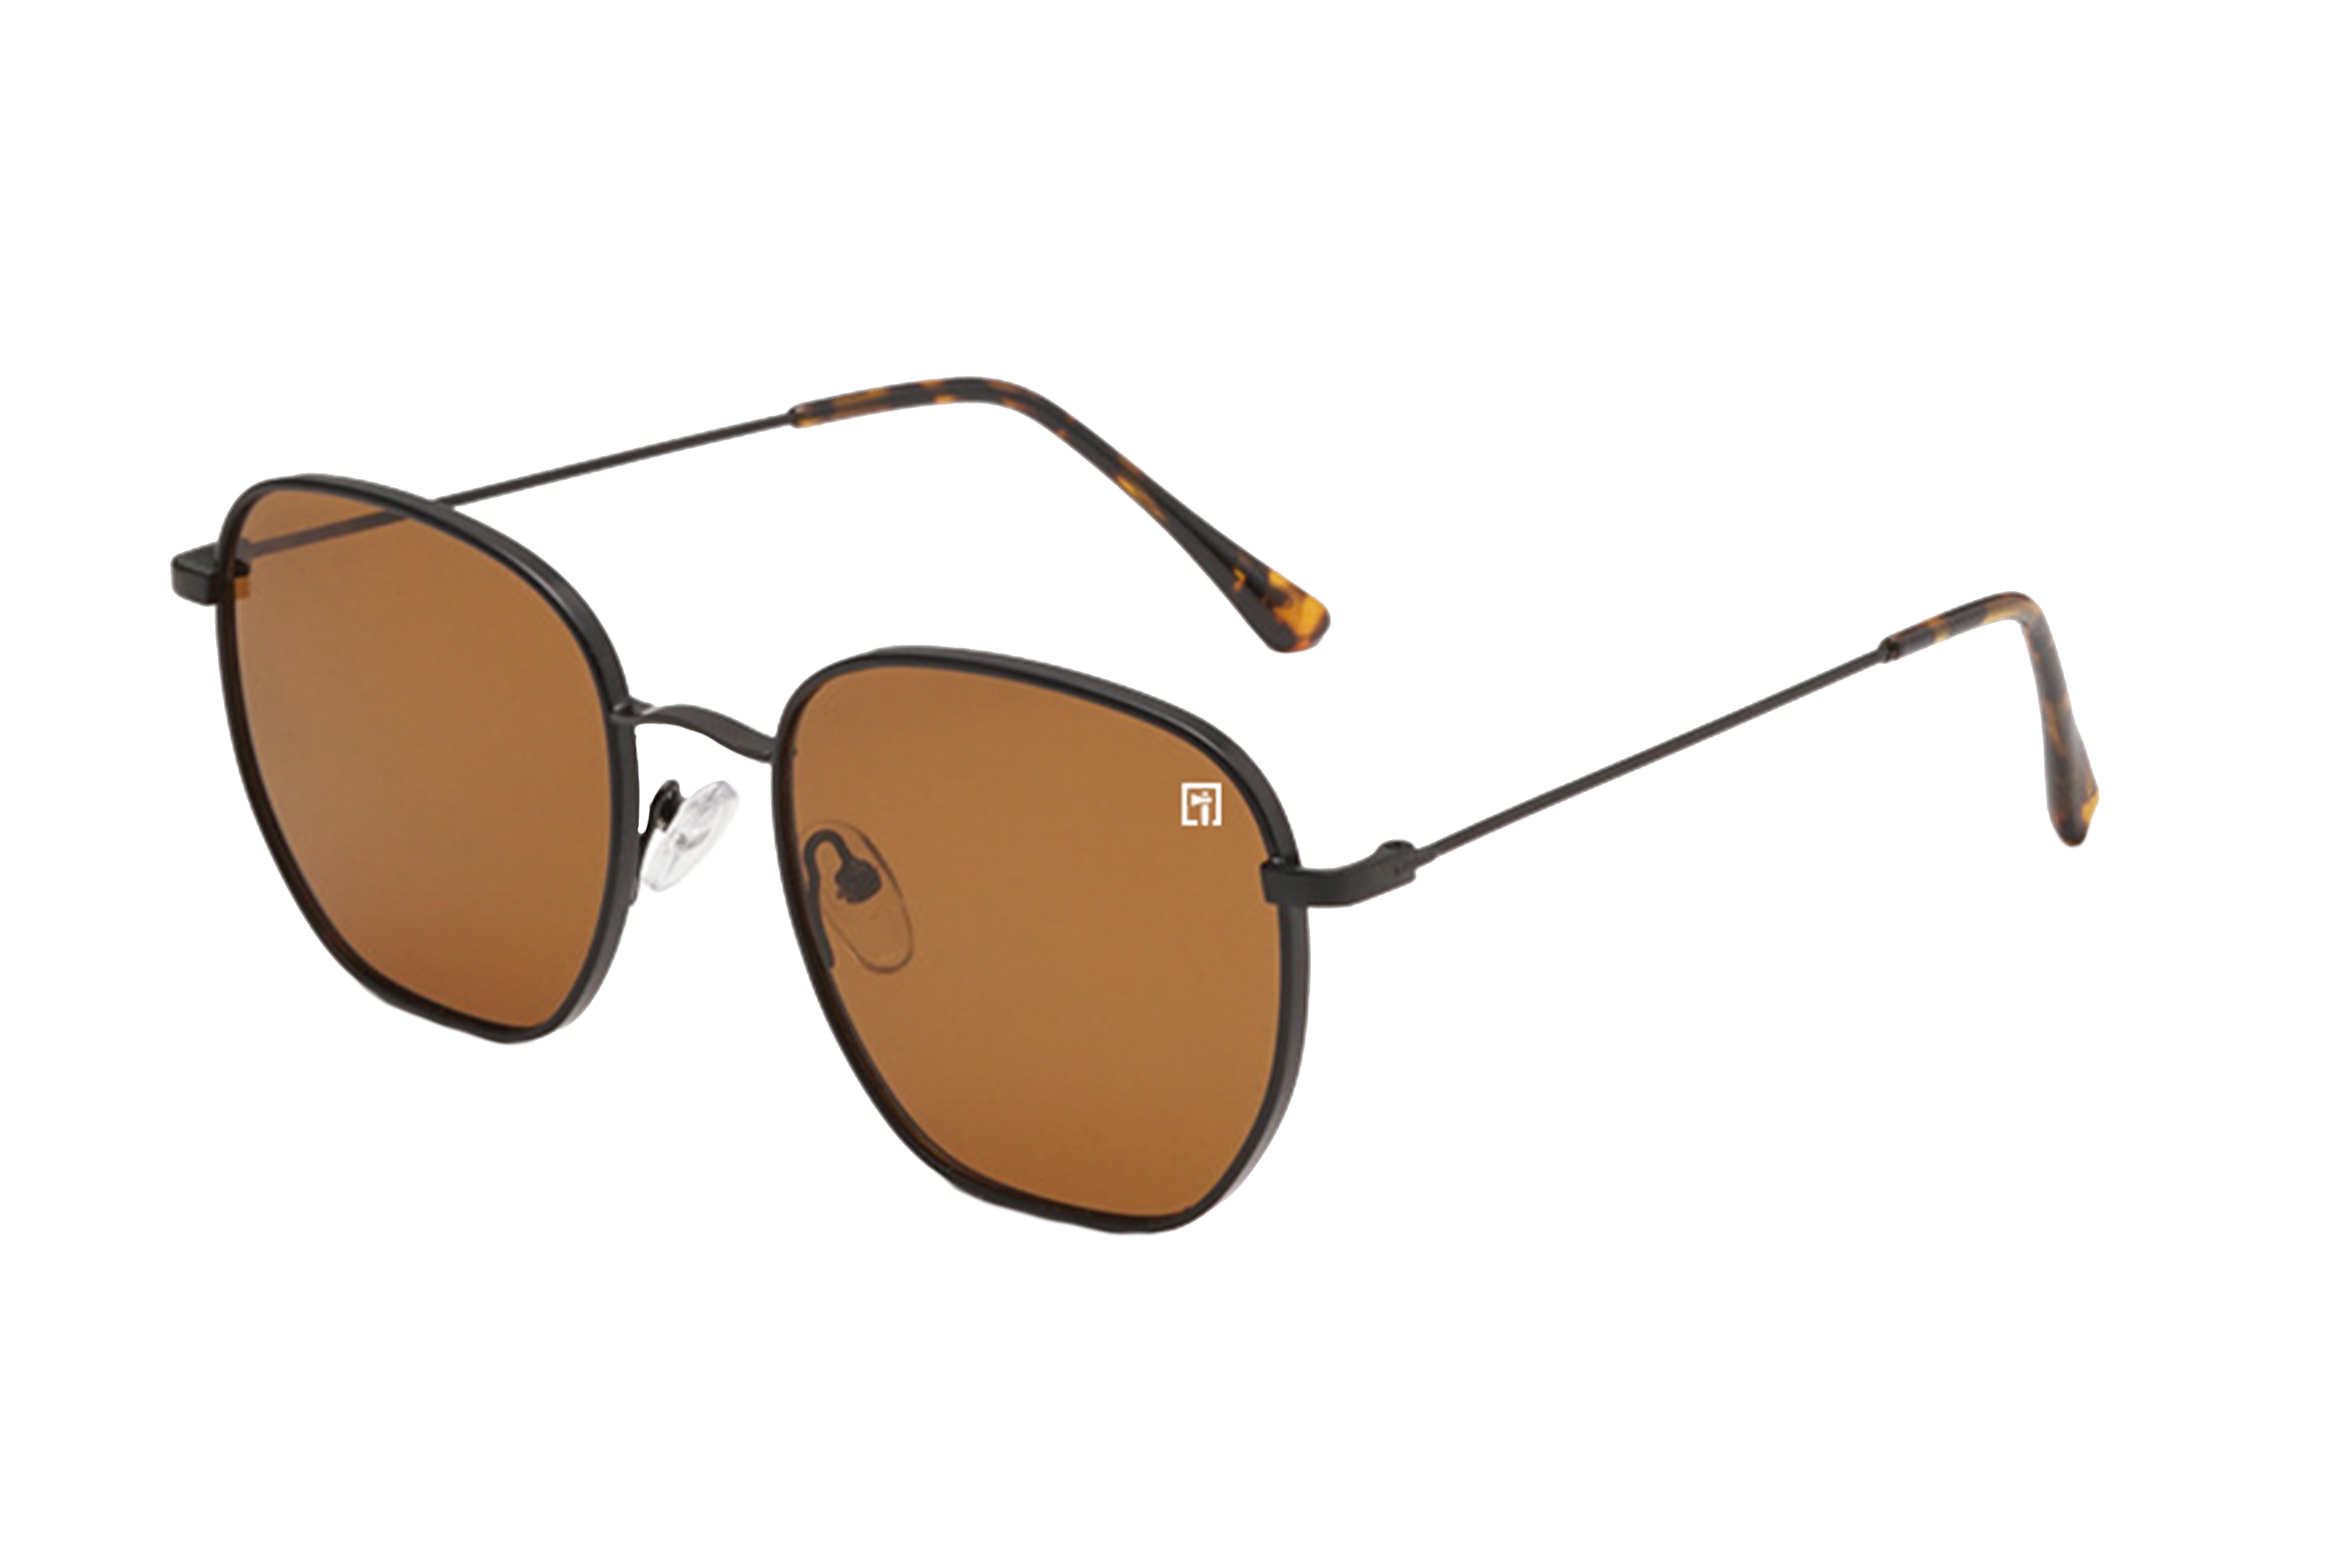 Tomahawk Shades Marksman Class Sunglasses for Men & Women - Impact Resistant Lenses & Full UV400 Protection